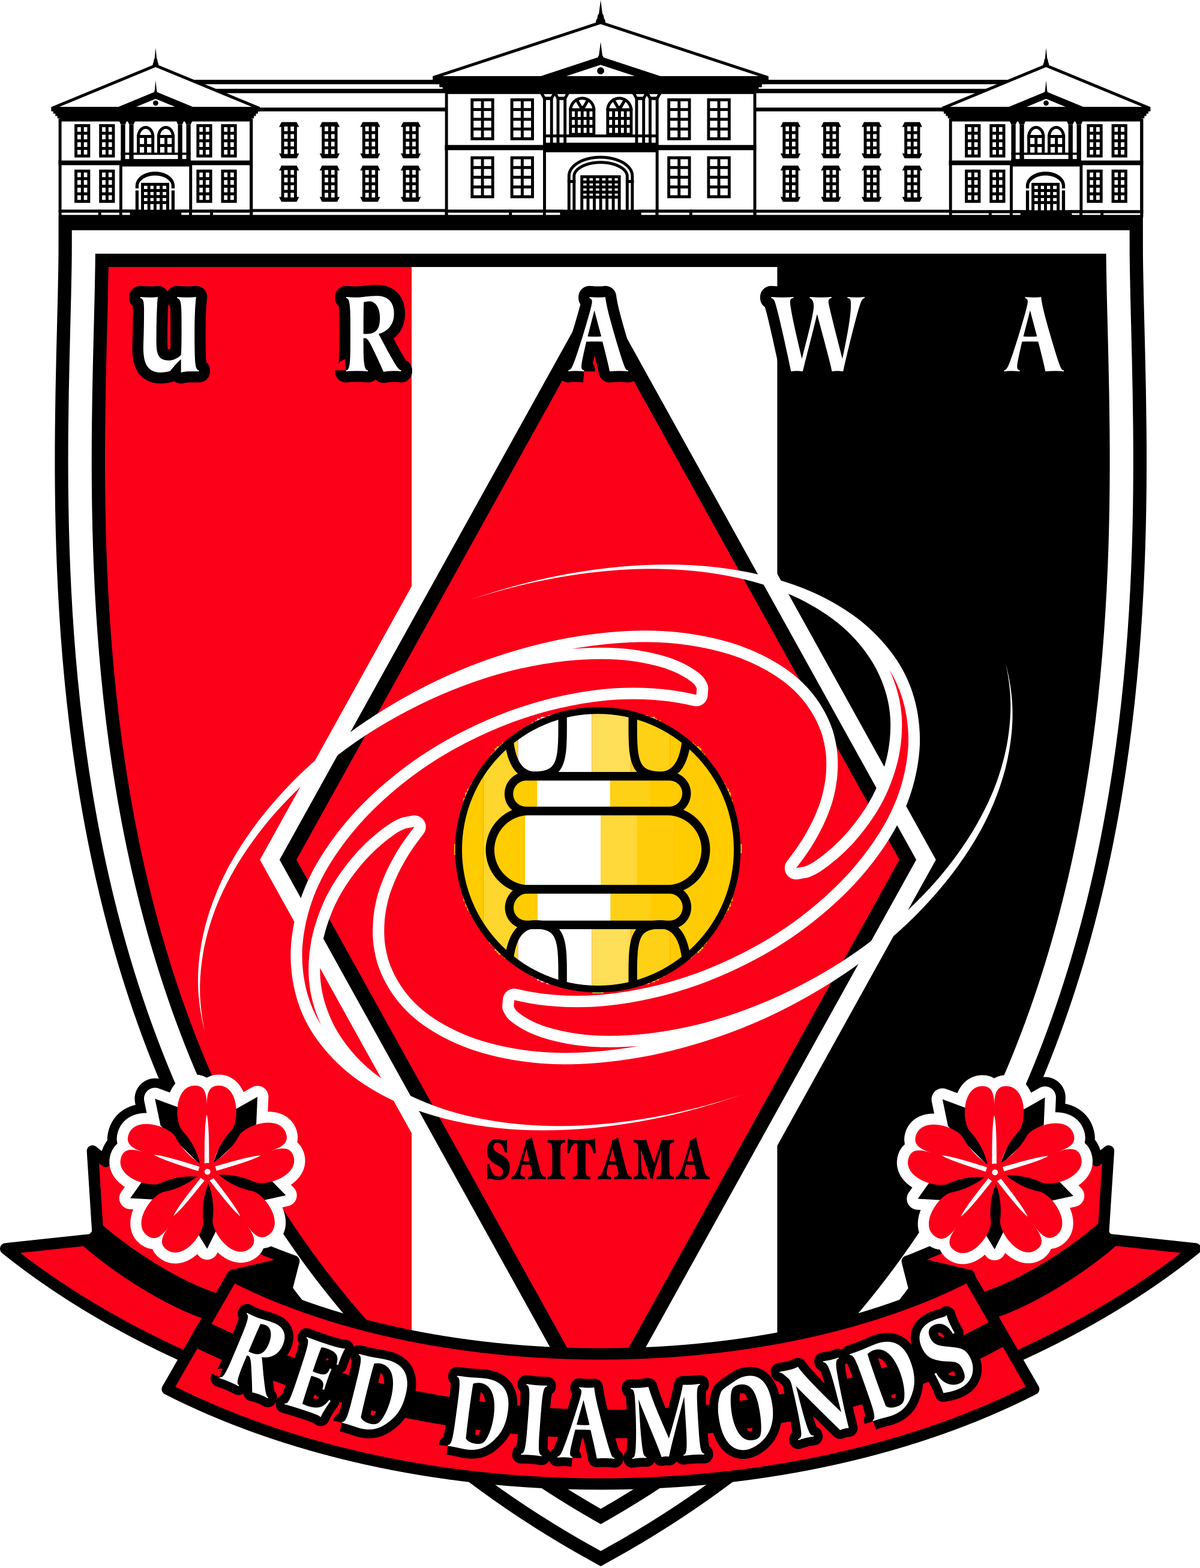 Urawa Red Diamonds | EA Sports FC wiki | Fandom